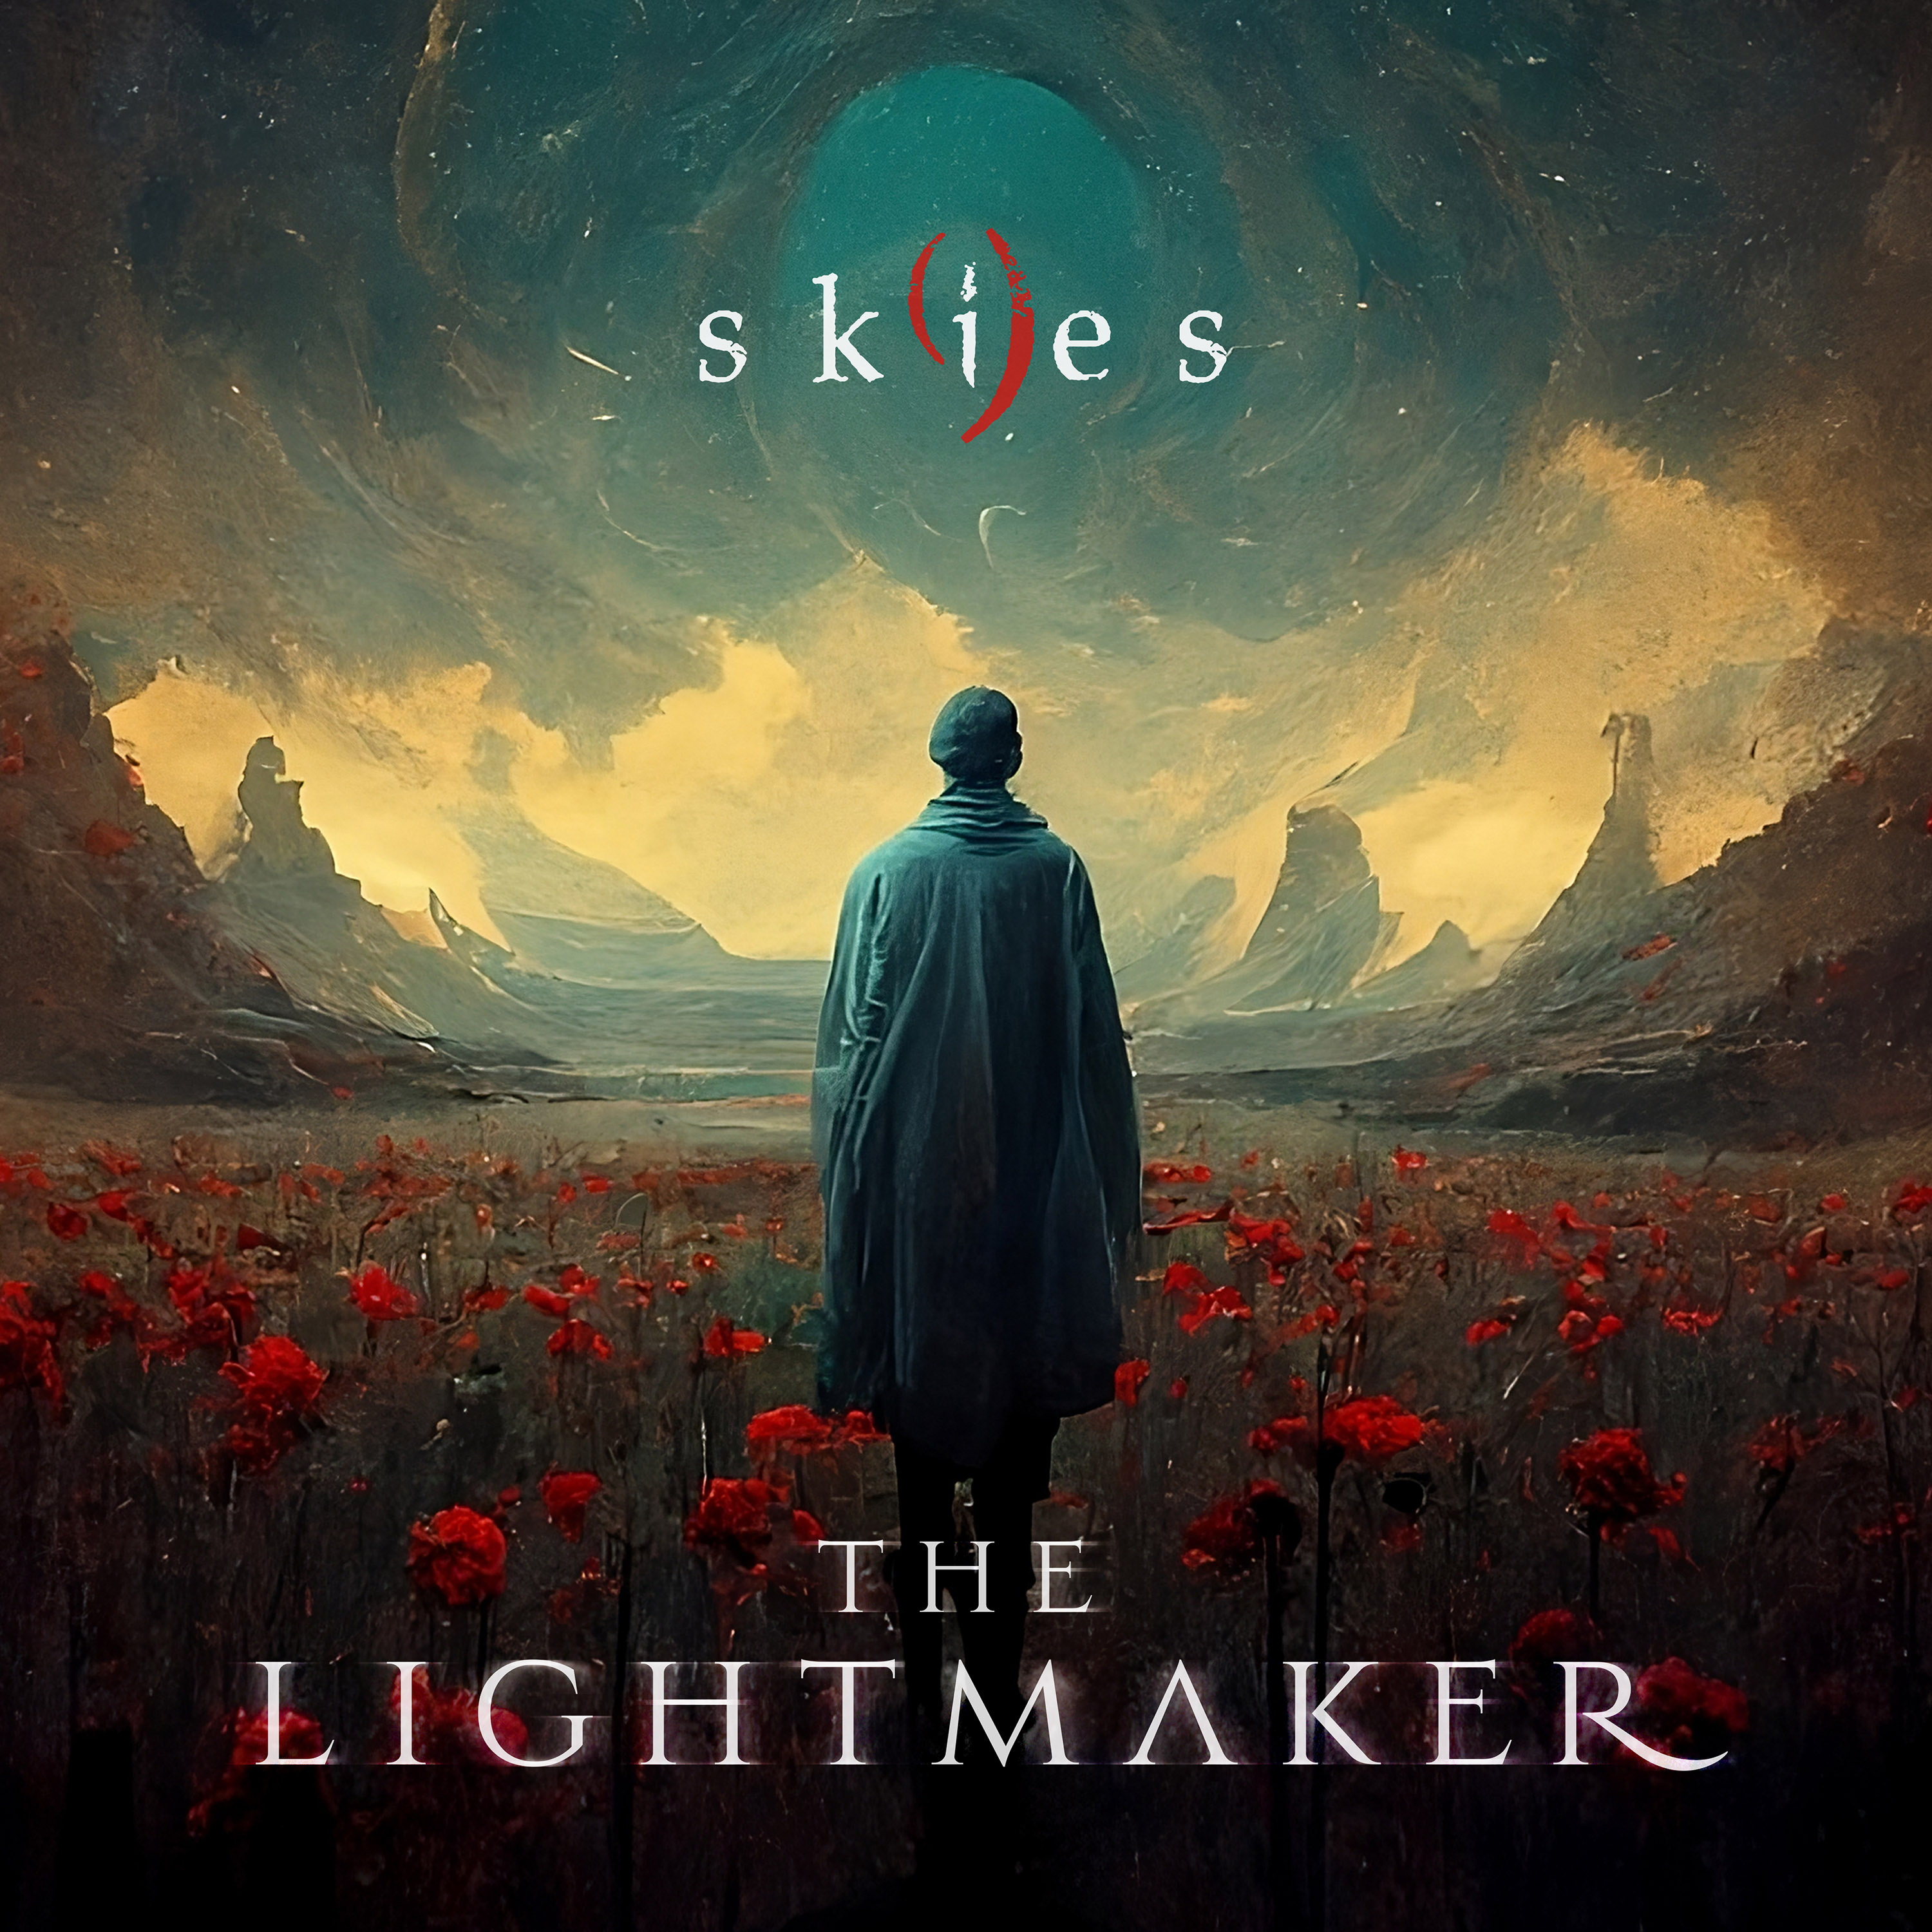 Nine Skies – "The Lightmaker"